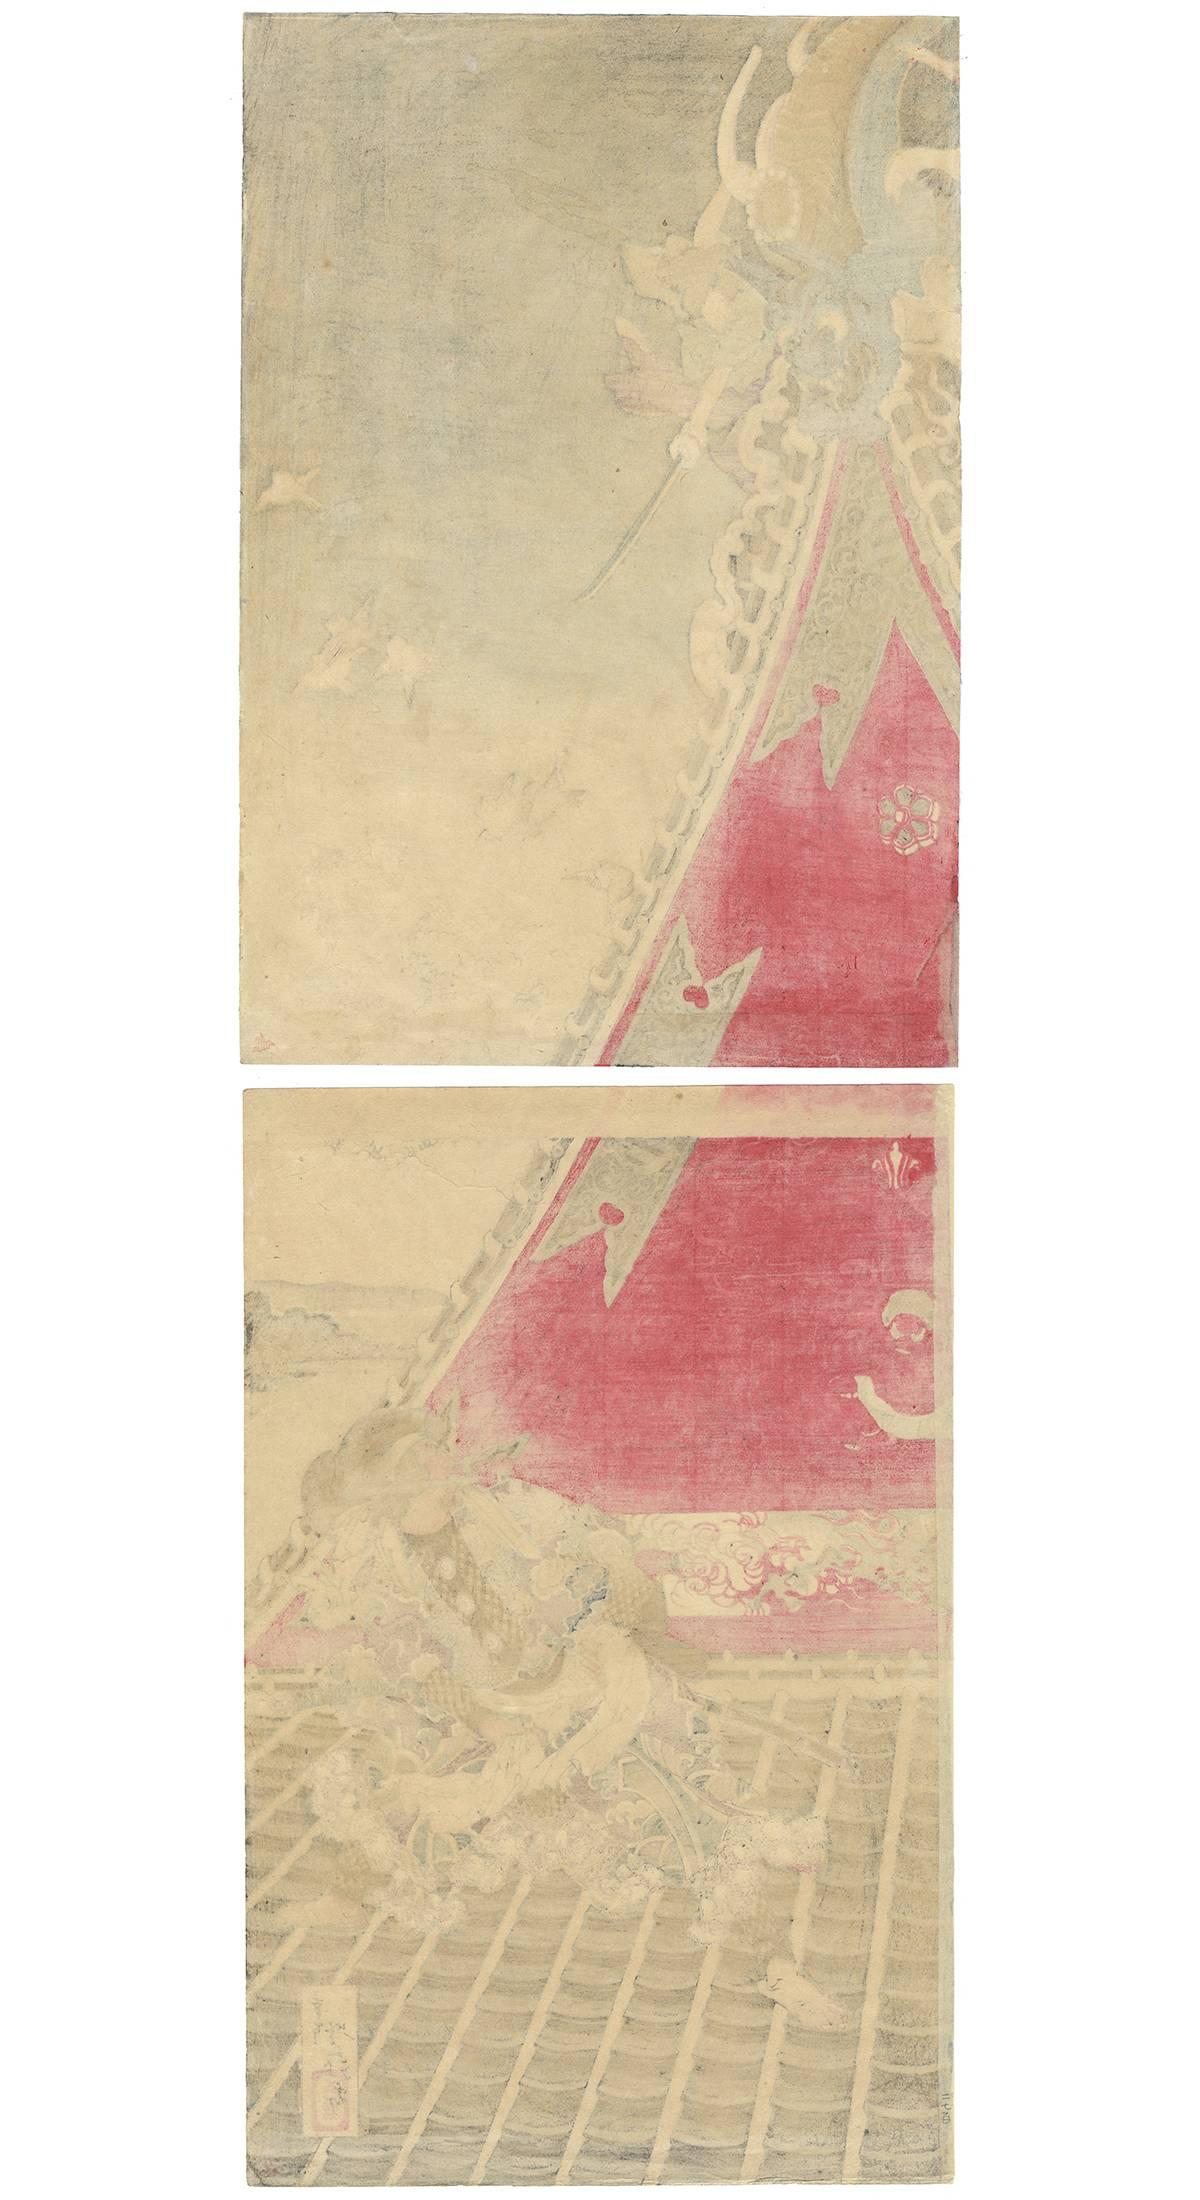 Artist: Yoshitoshi Tsukioka (1839 - 1892)
Title: Inuzuka and Inukai Fight Atop a Pavillion
Publisher: Hasegawa Tsunejiro
Published in 1885.
Measurements: Top 24.6 x 35.8, bottom 24.3 x 37.6 cm
Hand-printed on Japanese washi paper.

This print